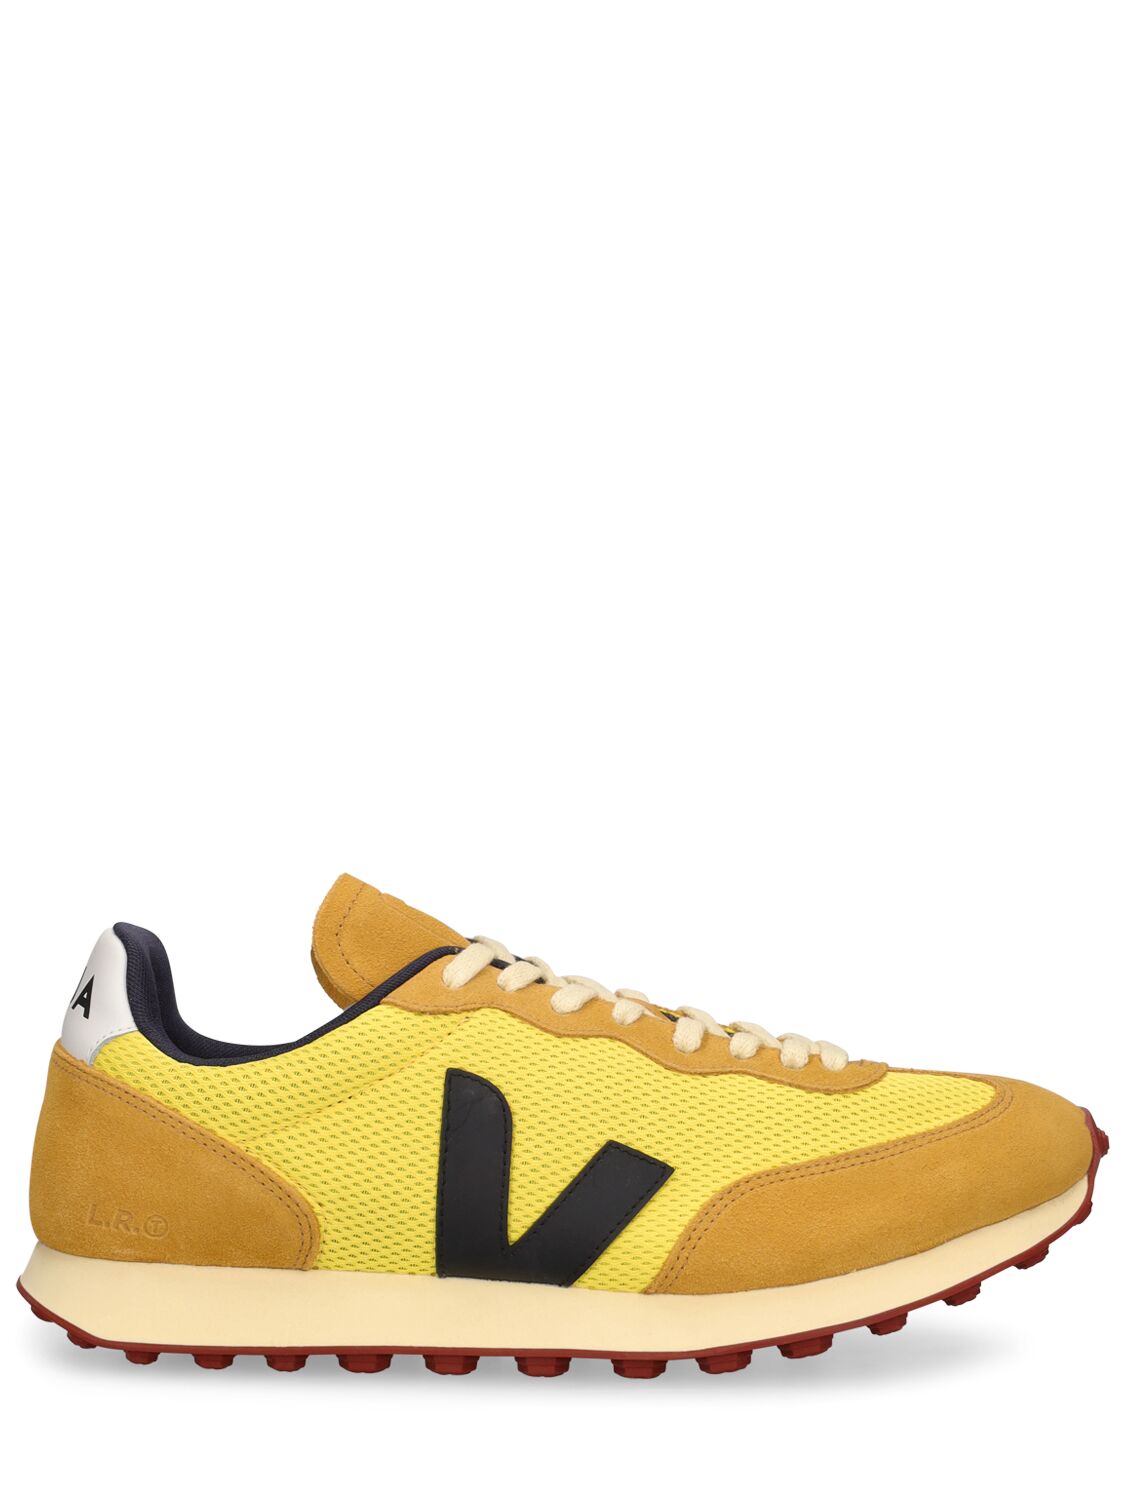 Veja Rio Branco Alveomesh & Suede Sneakers In Yellow